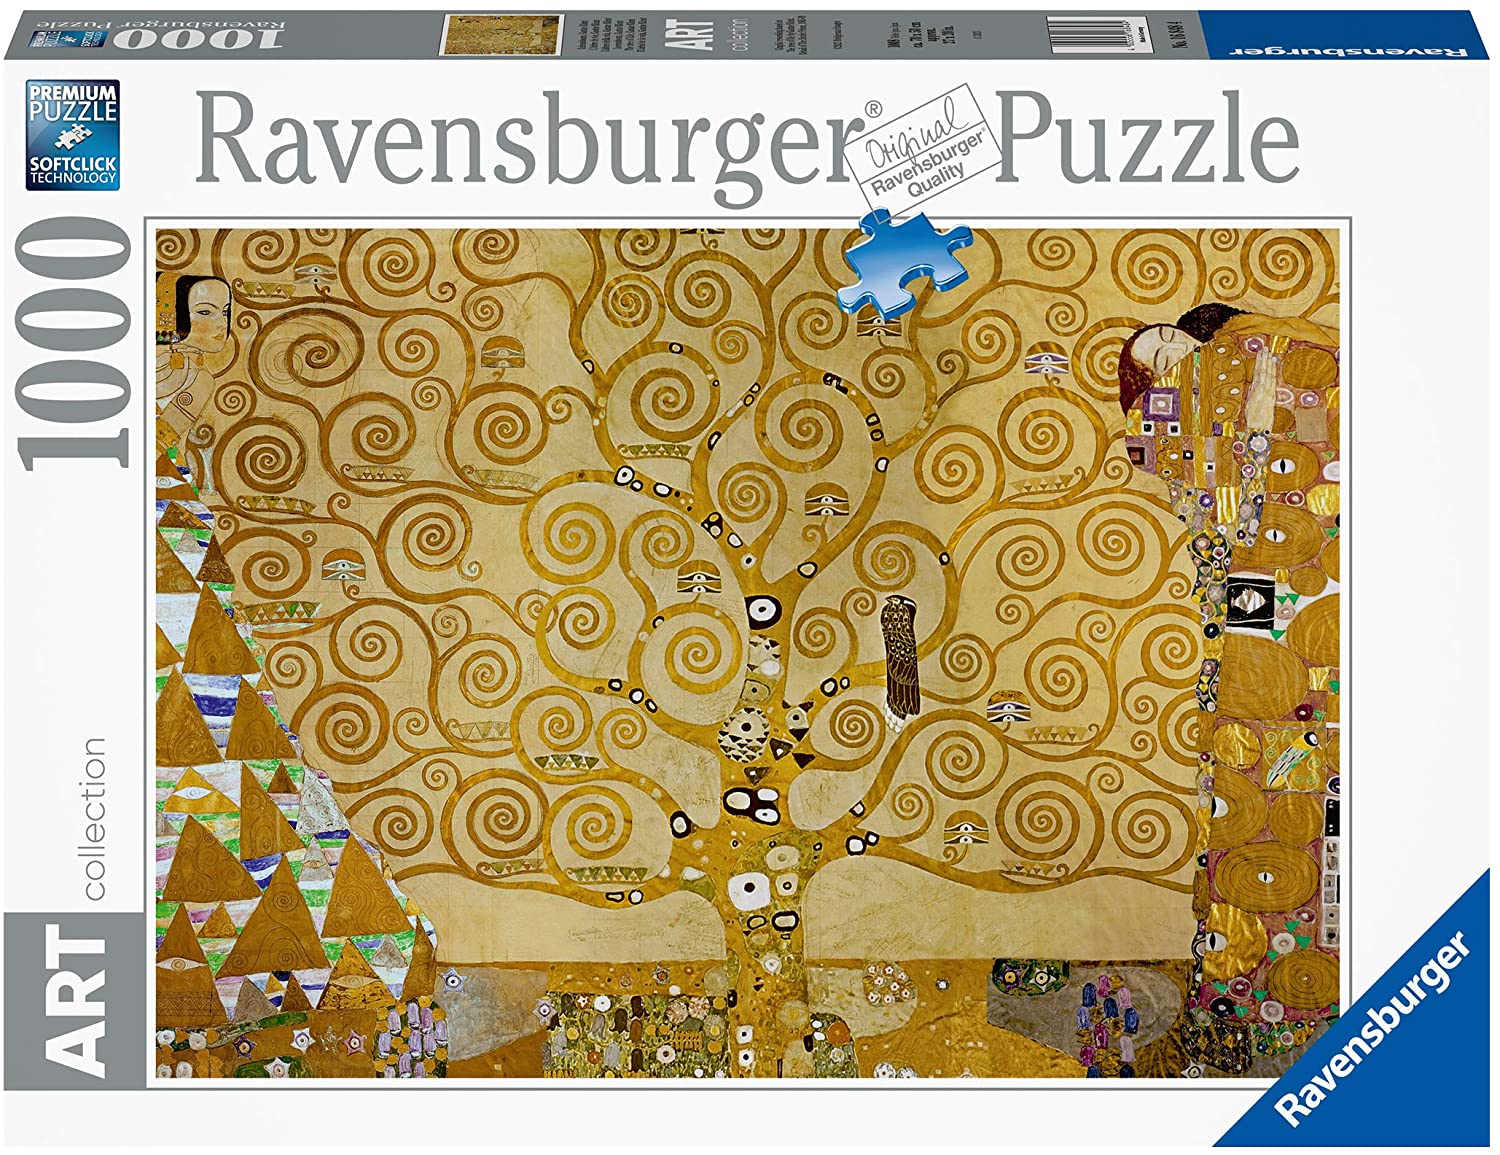 Ravensburger Doodle Jump Game by Ravensburger - Shop Online for Toys in the  United Arab Emirates